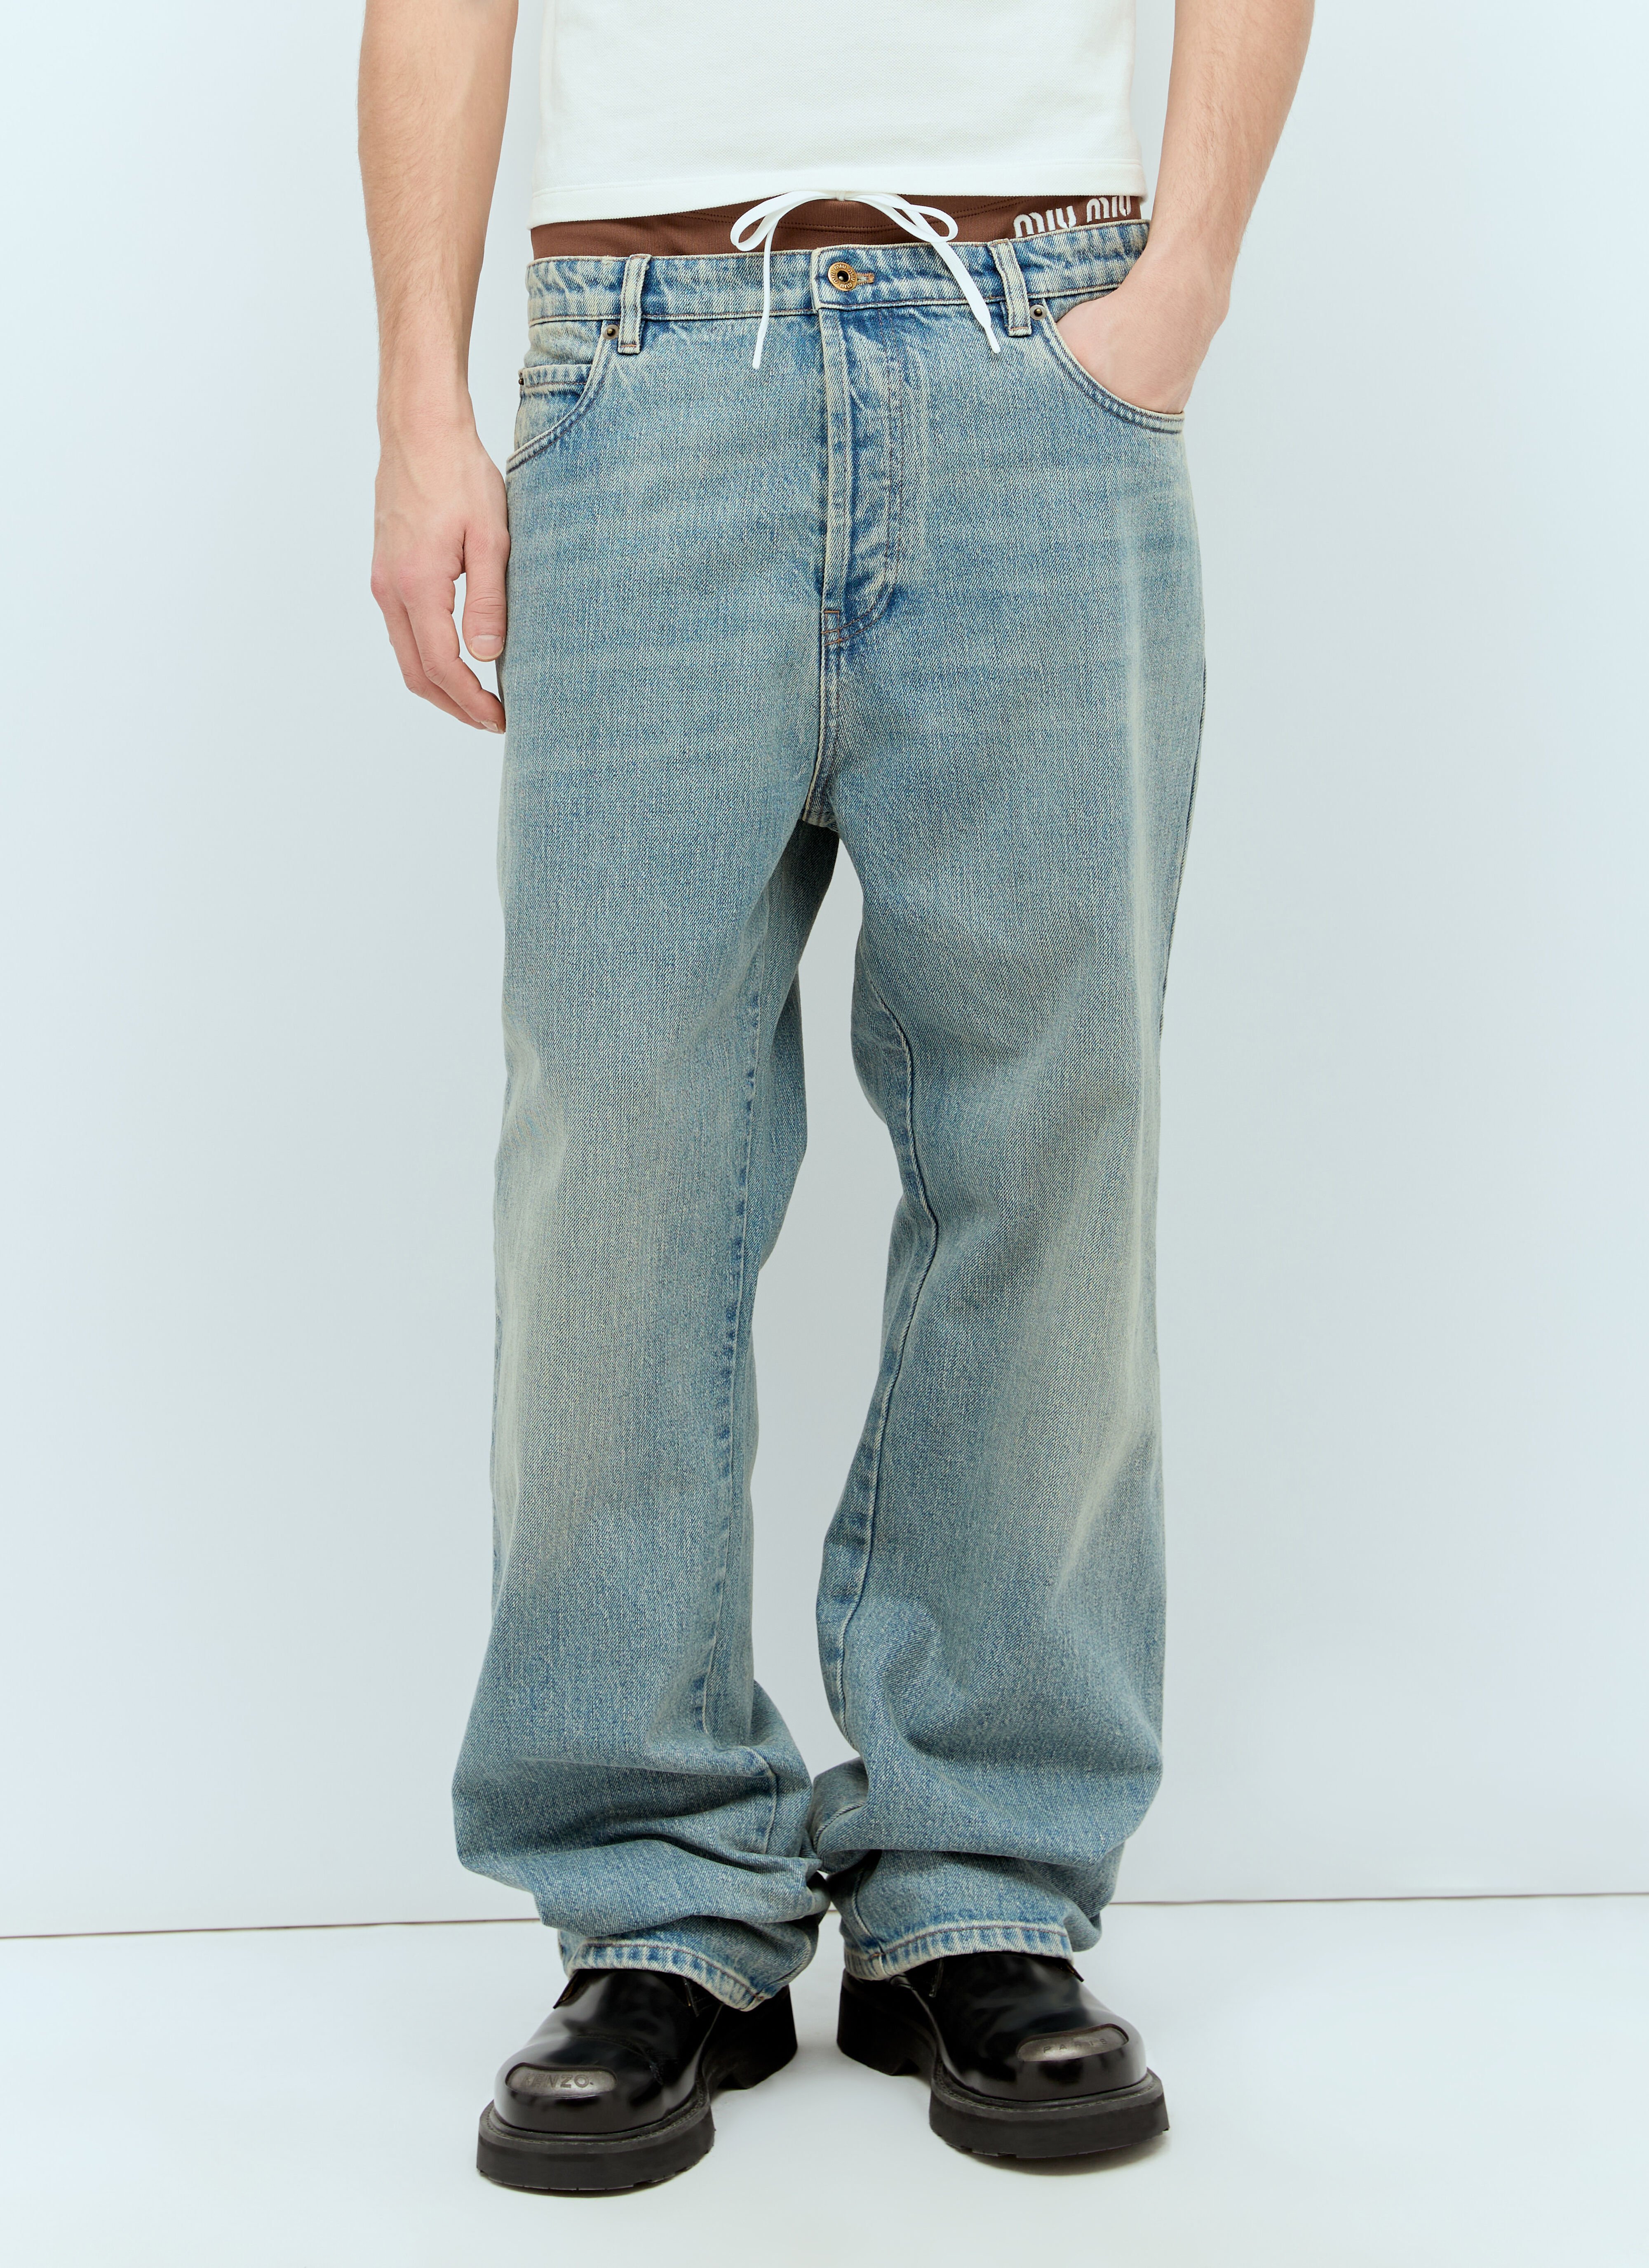 Miu Miu Five Pocket Jeans Beige miu0155005